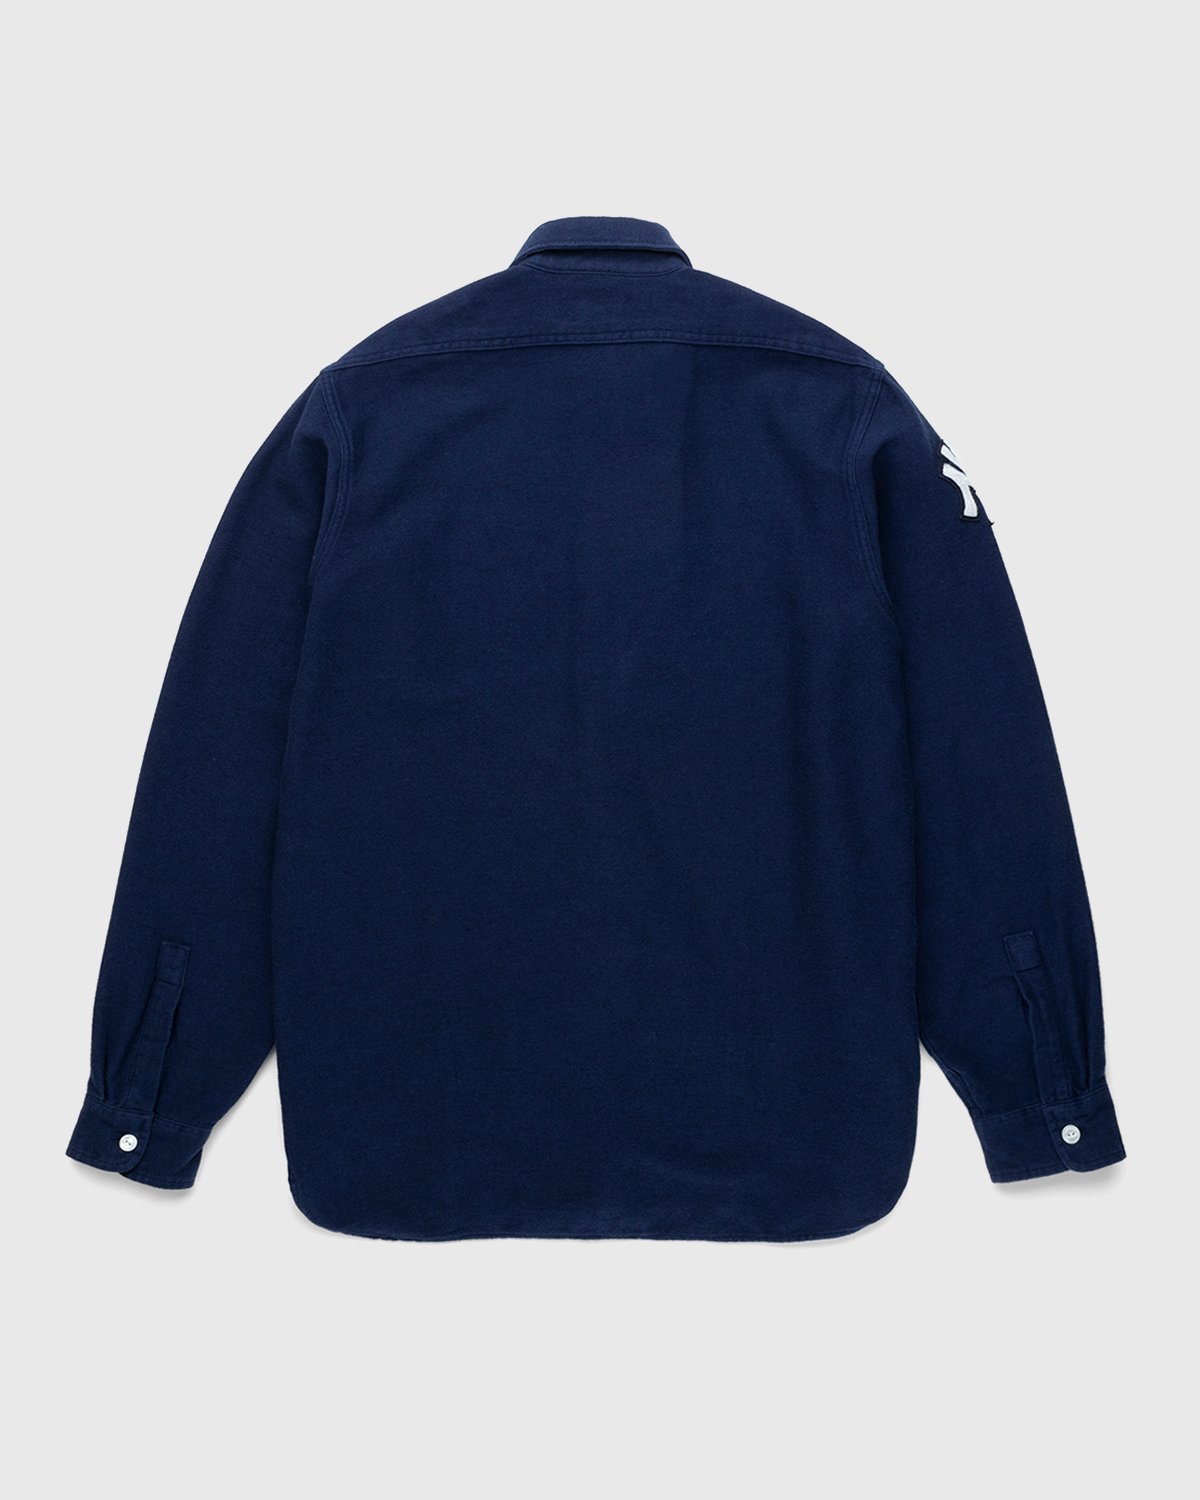 Ralph Lauren - Yankees Popover Shirt Navy - Clothing - Blue - Image 2